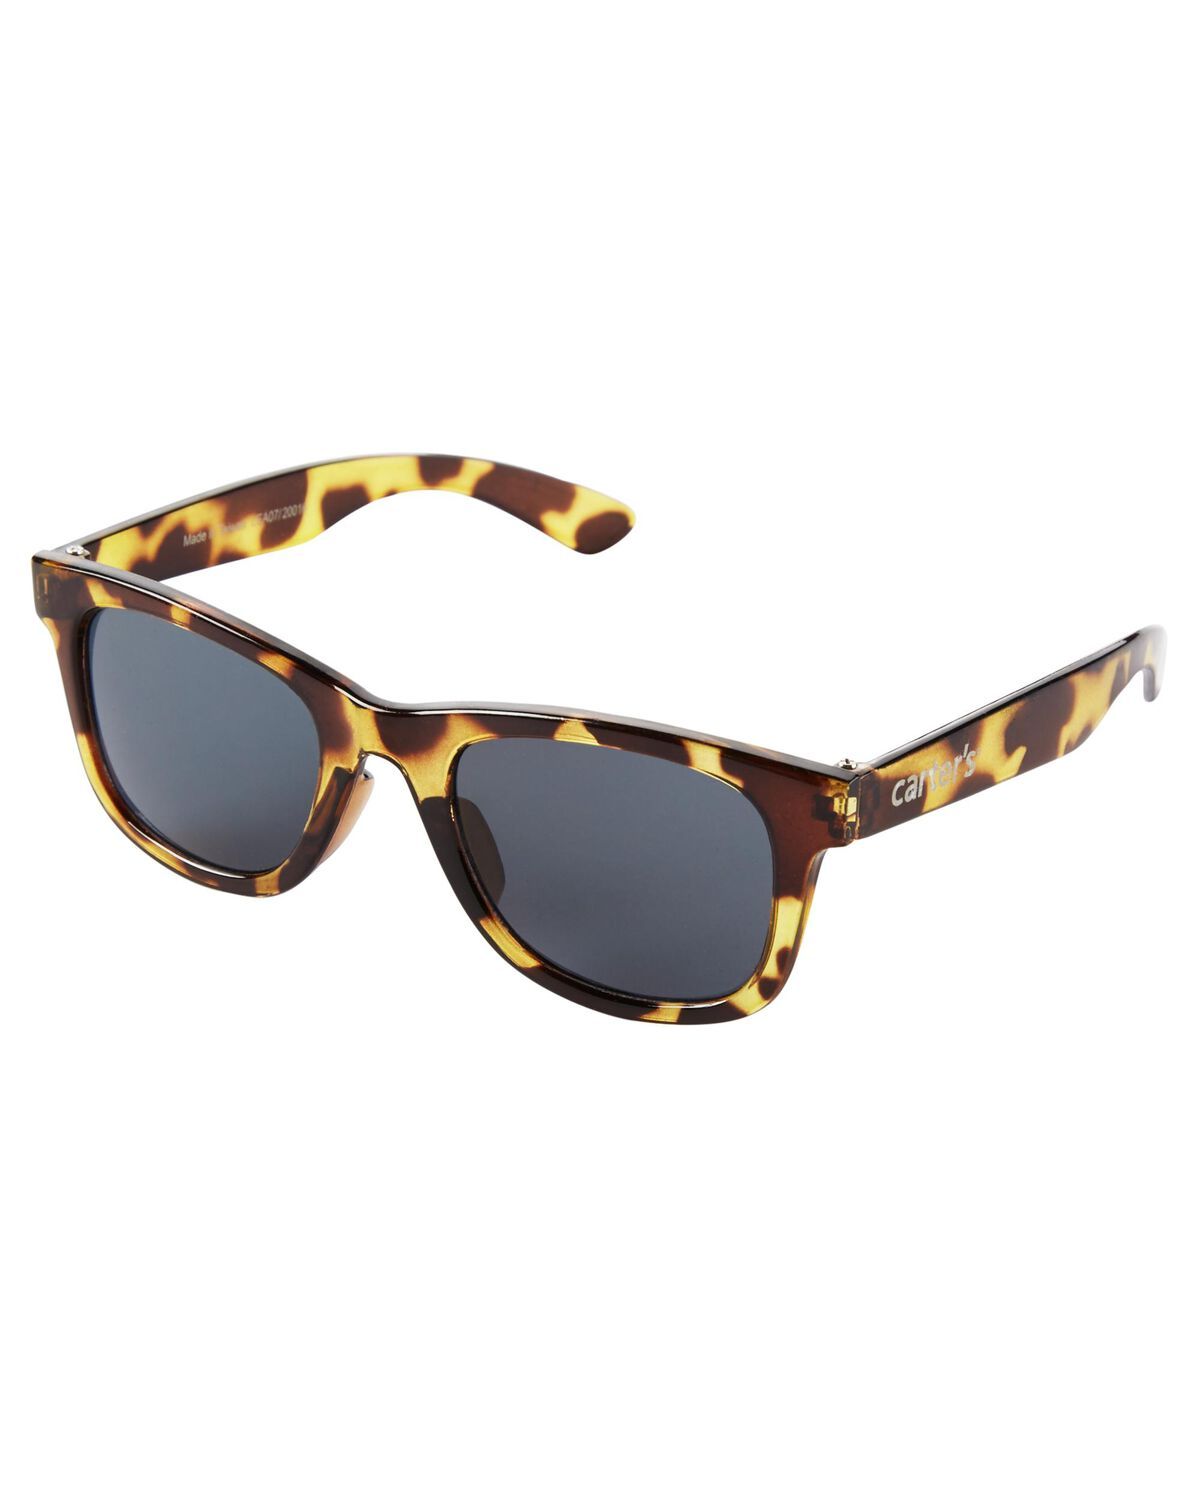 Tortoise Shell Classic Sunglasses | Carter's